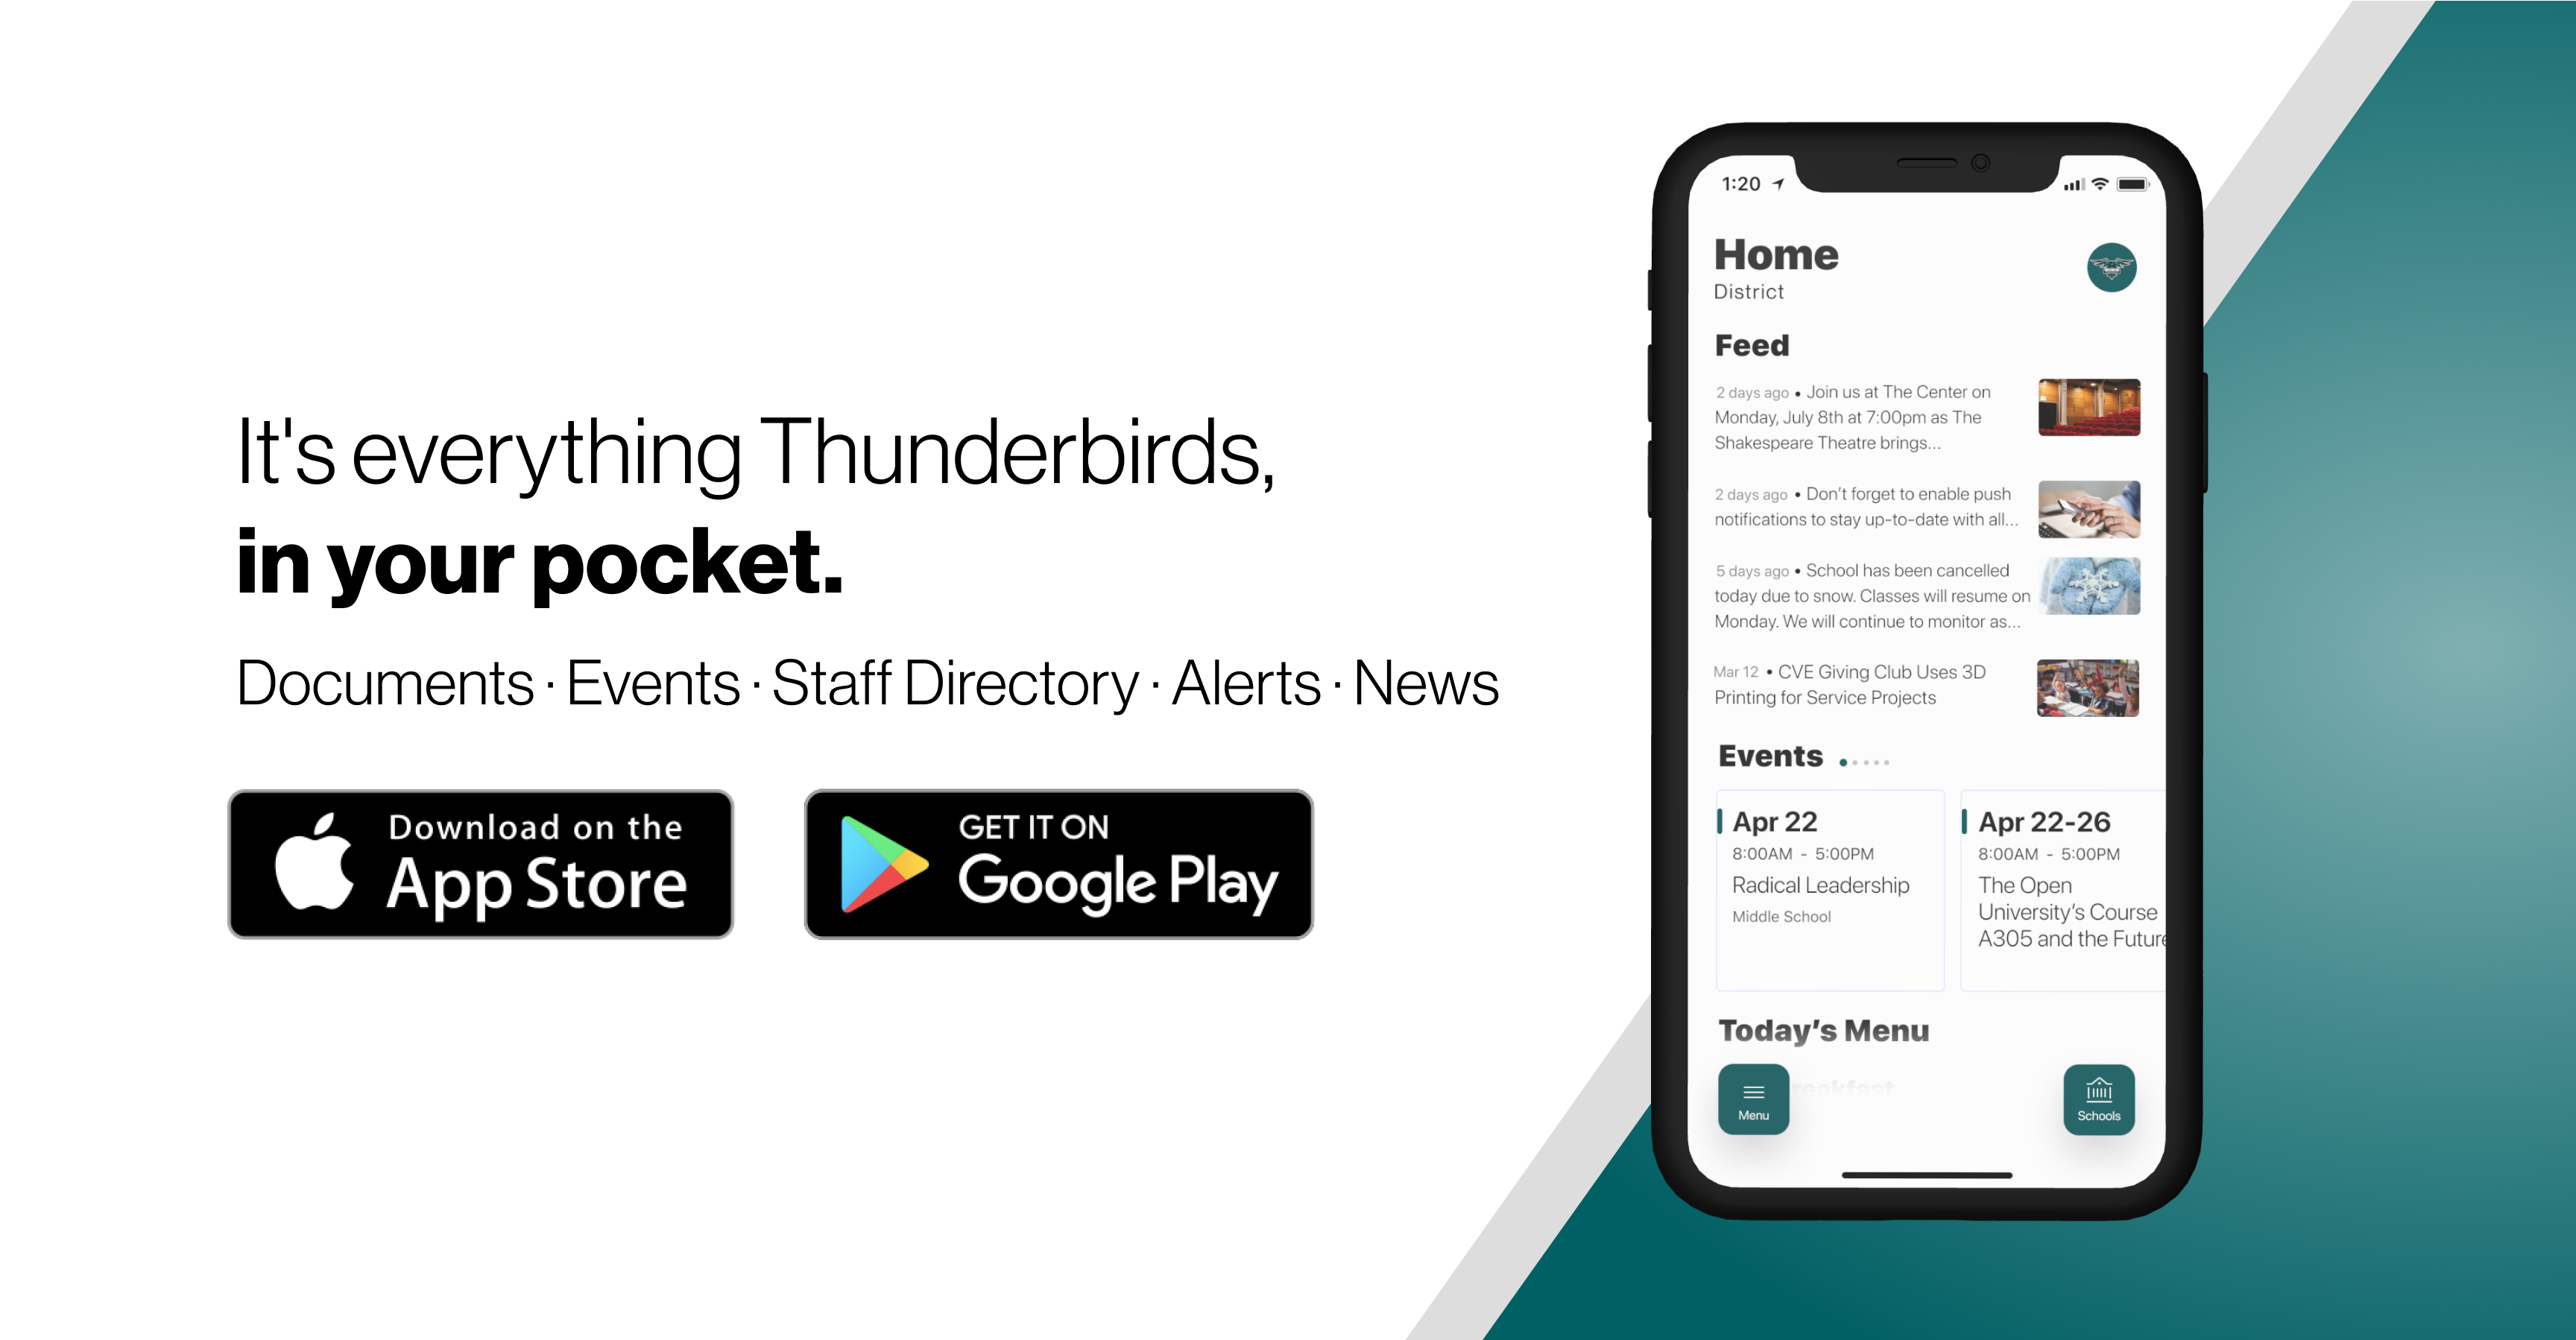 Waubun App - Its everything thunderbirds, in your pocket.